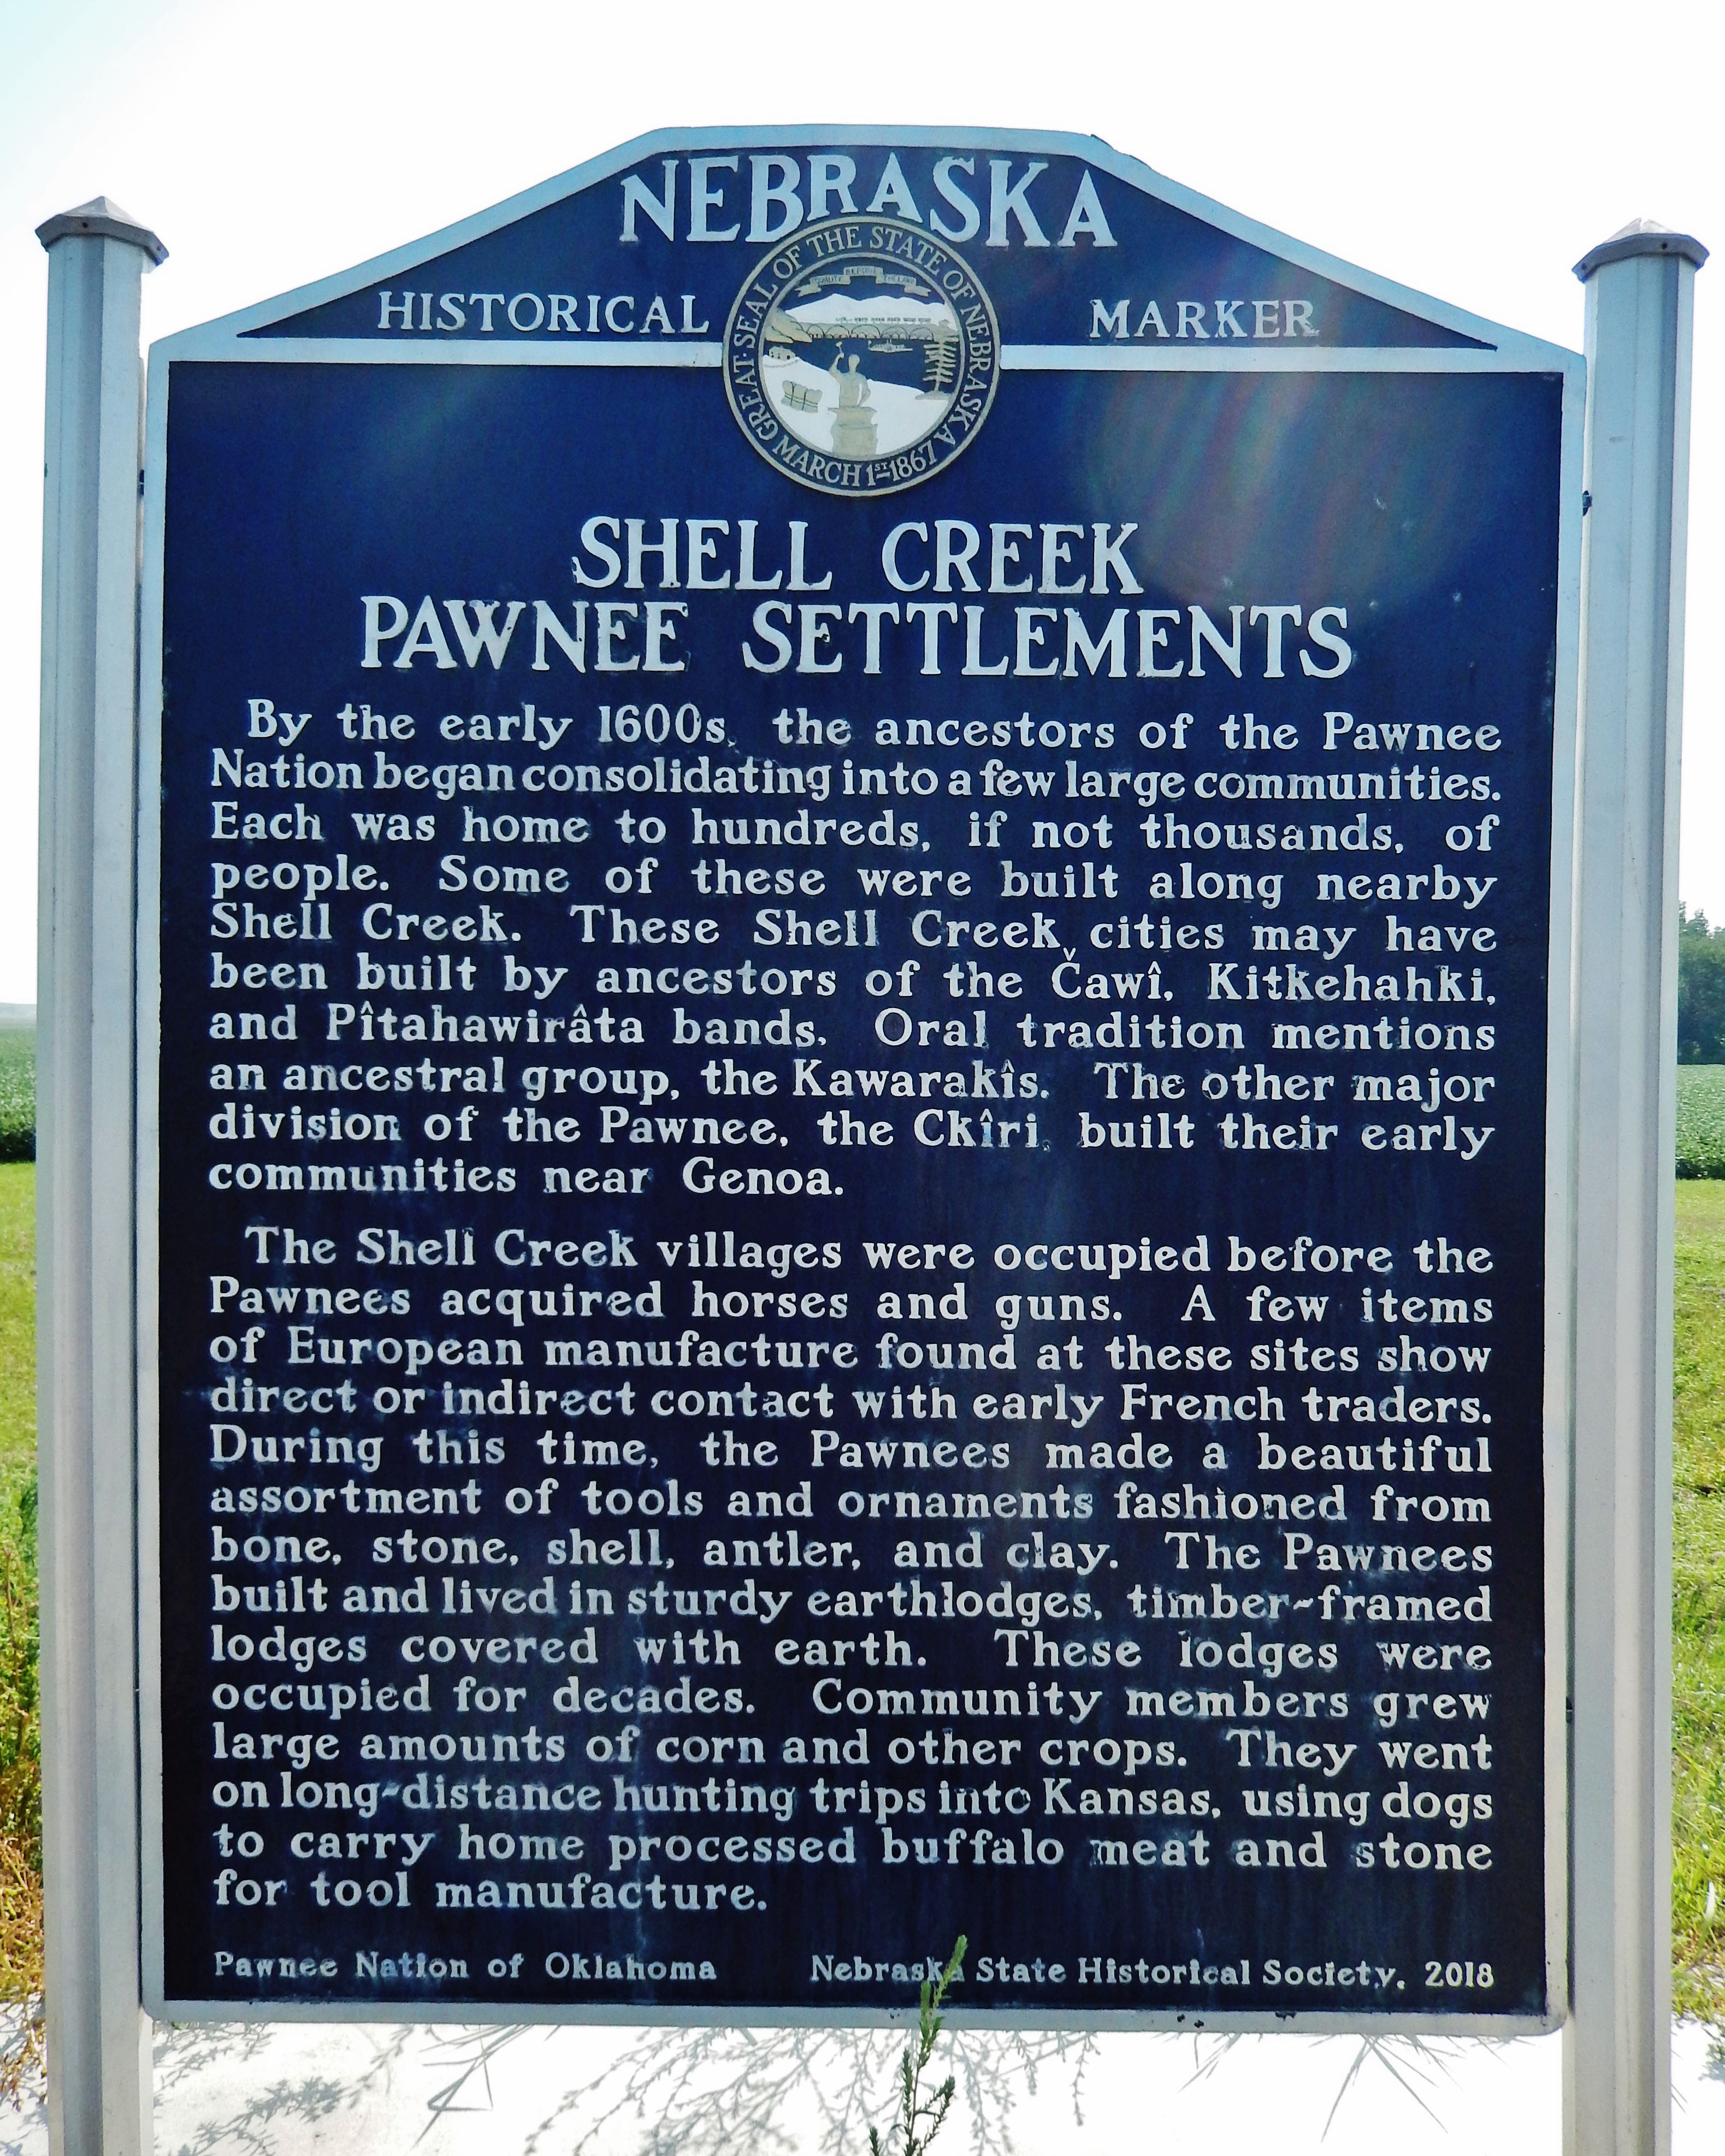 Shell Creek Pawnee Settlements Marker